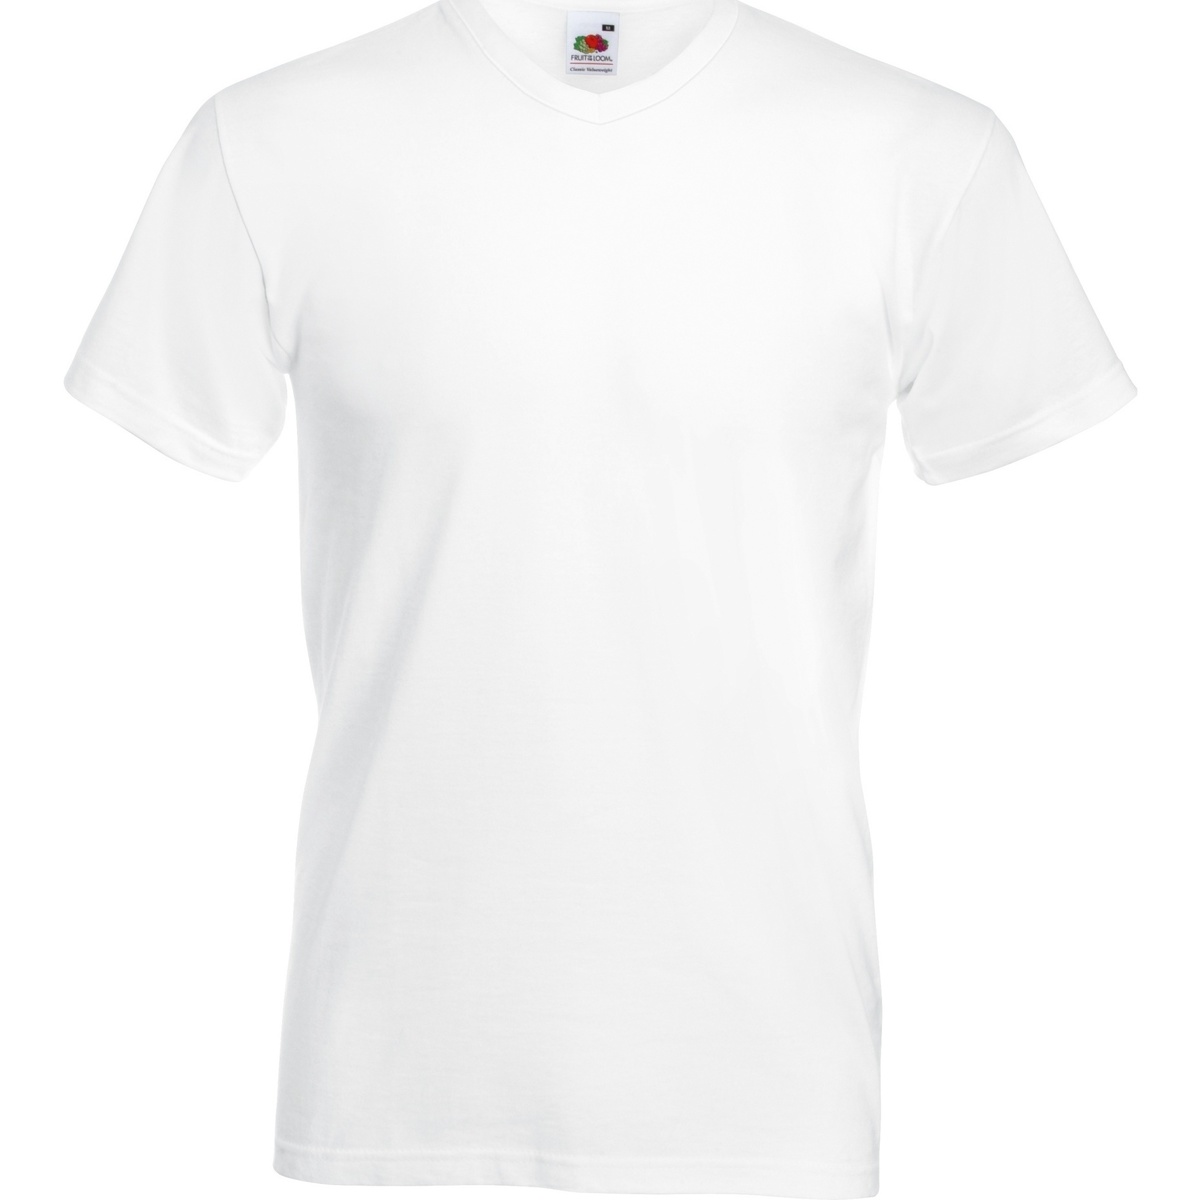 Vêtements Homme T-shirts manches courtes Fruit Of The Loom 61066 Blanc